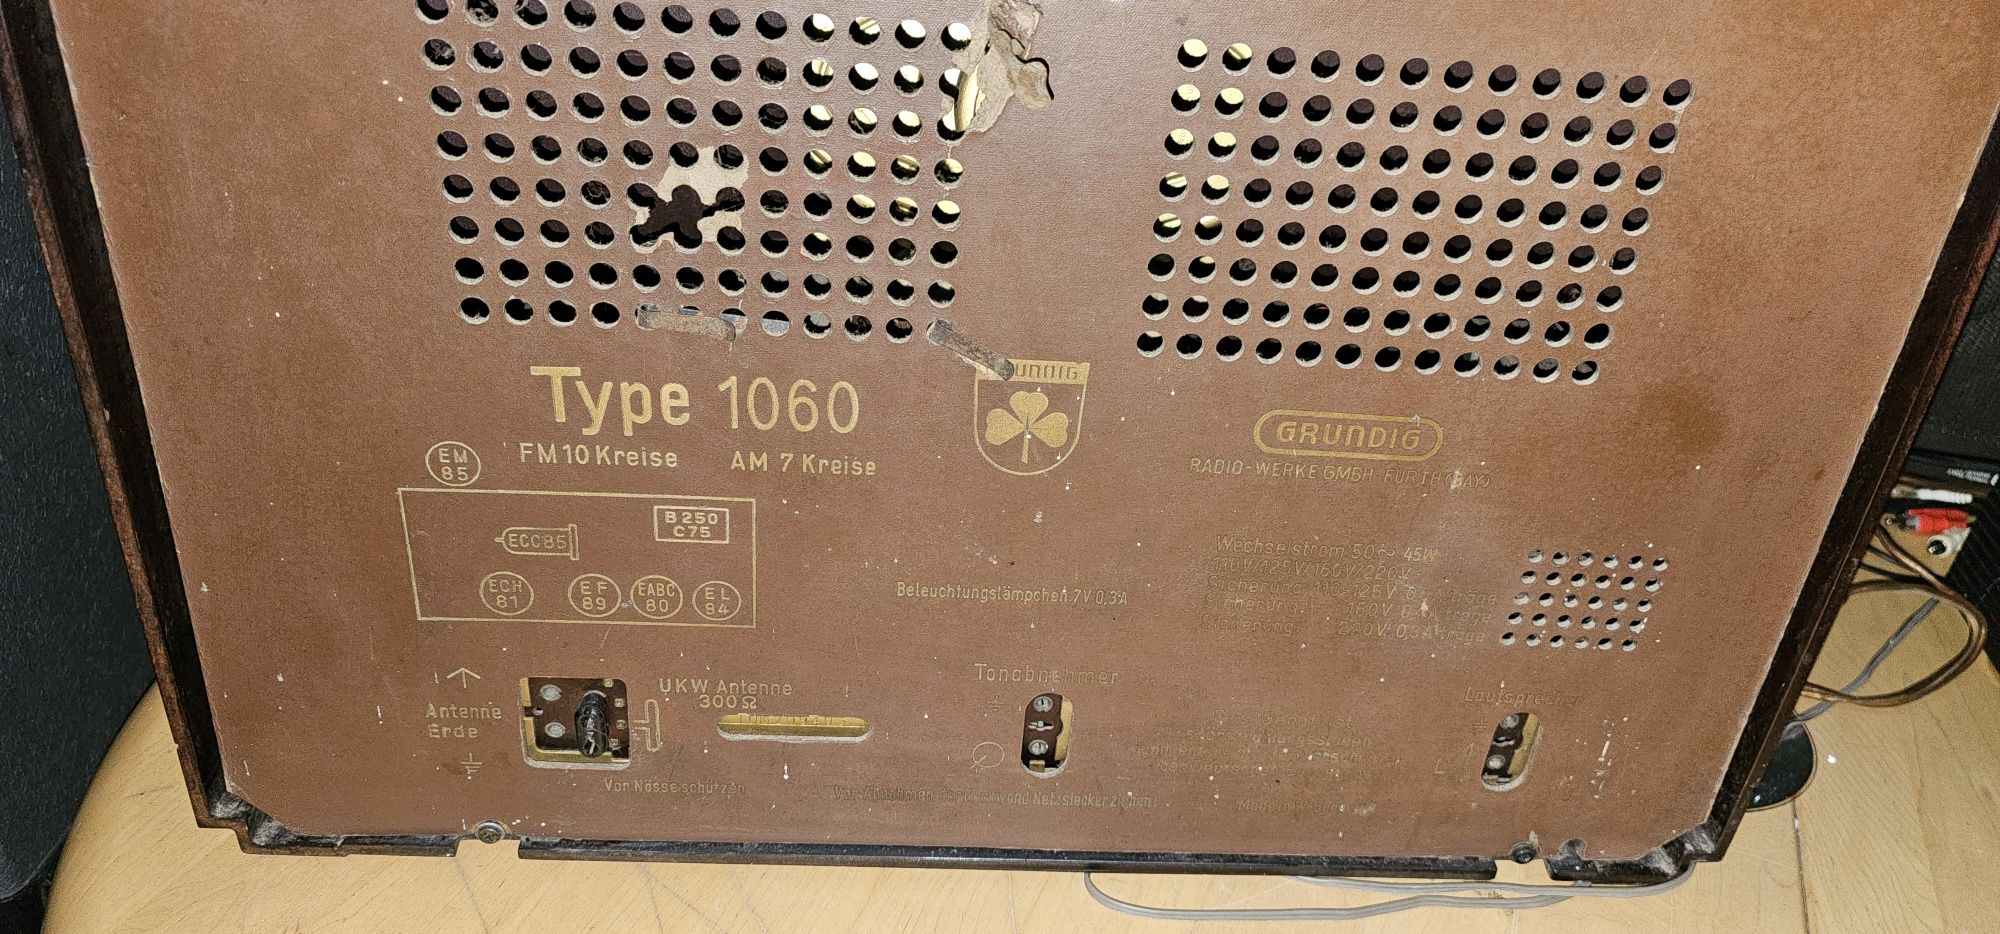 Stare antyczne radia